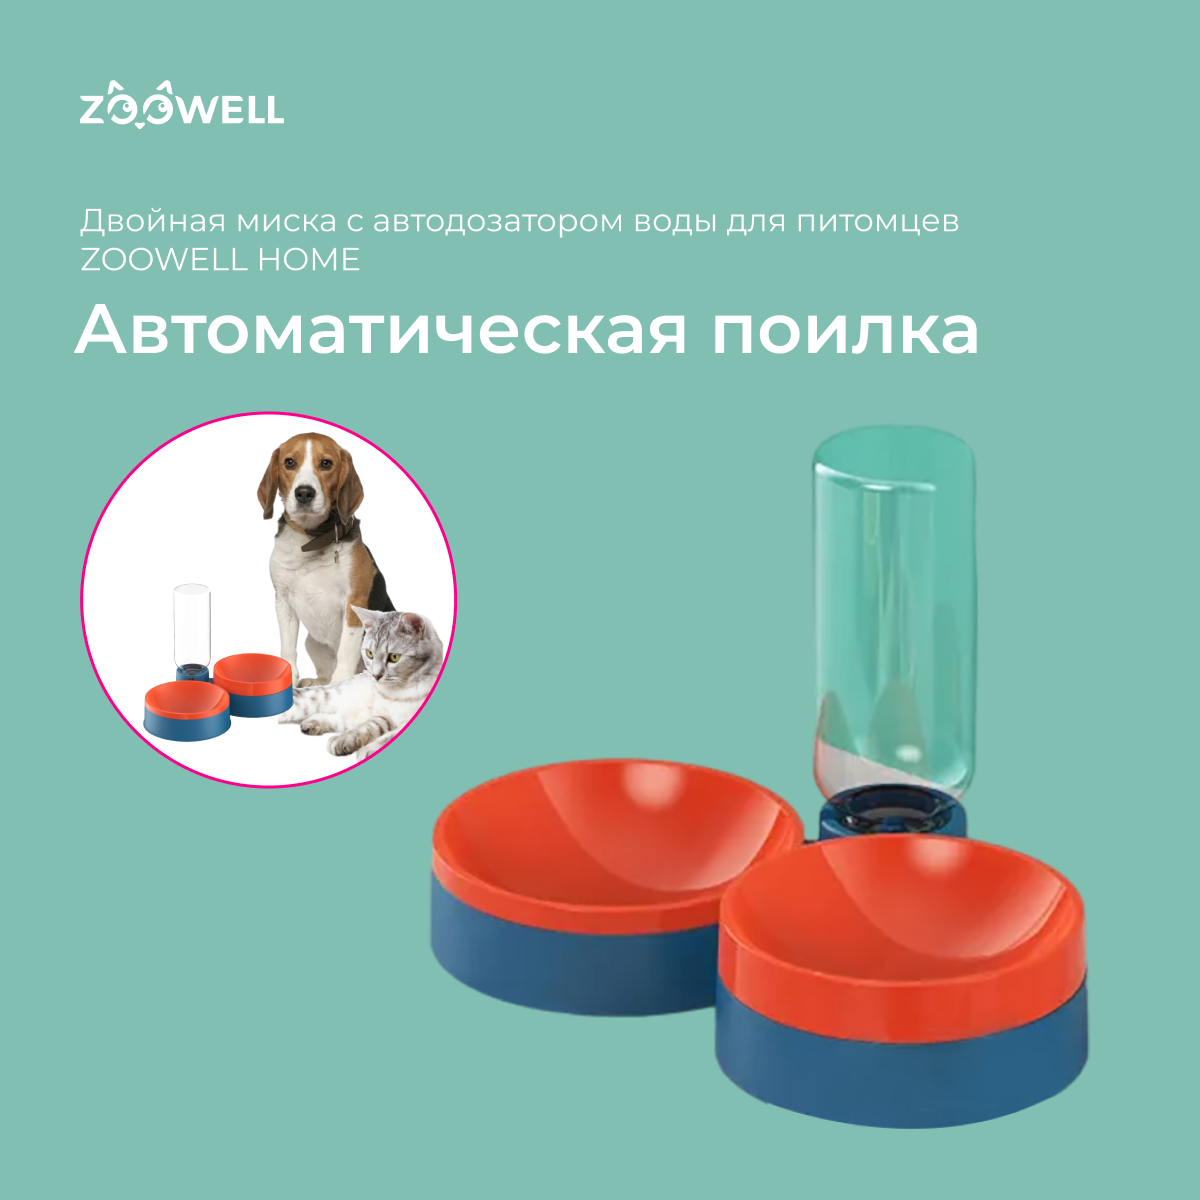 Автоматическая поилка для животных ZooWell Home двойная, c бутылкой